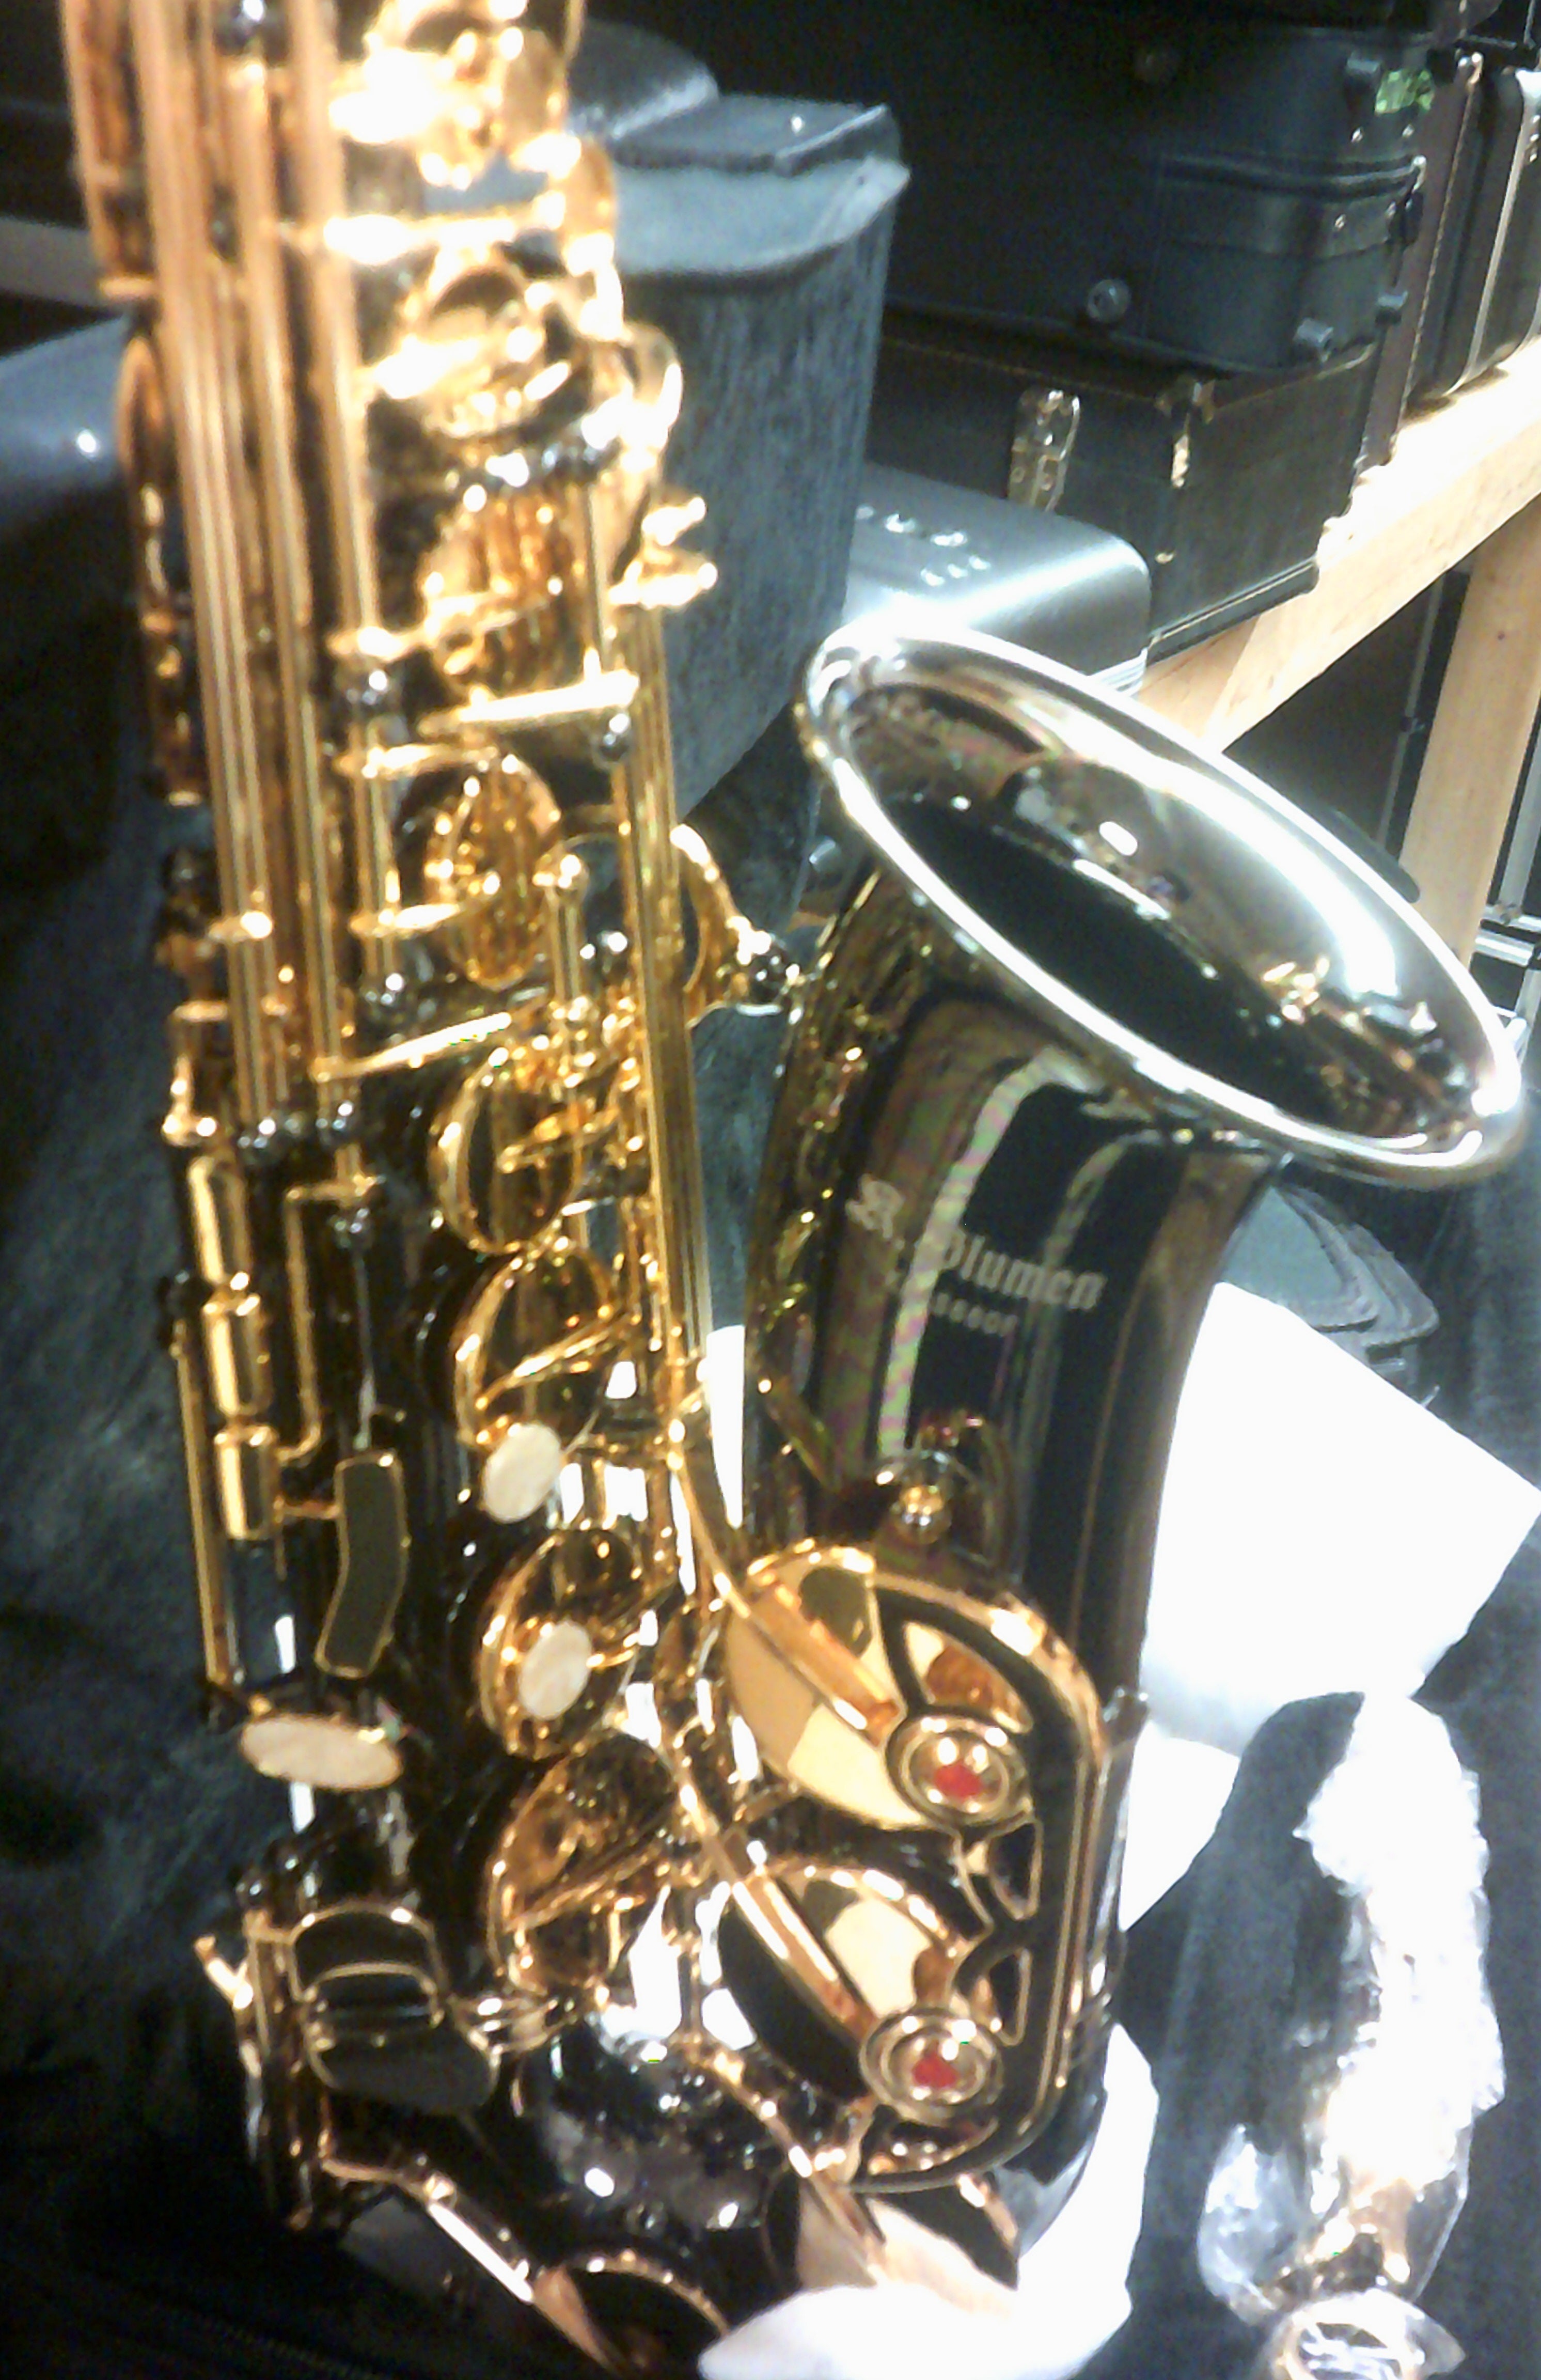 K. Blumen Alto Saxophone KBAS-660F